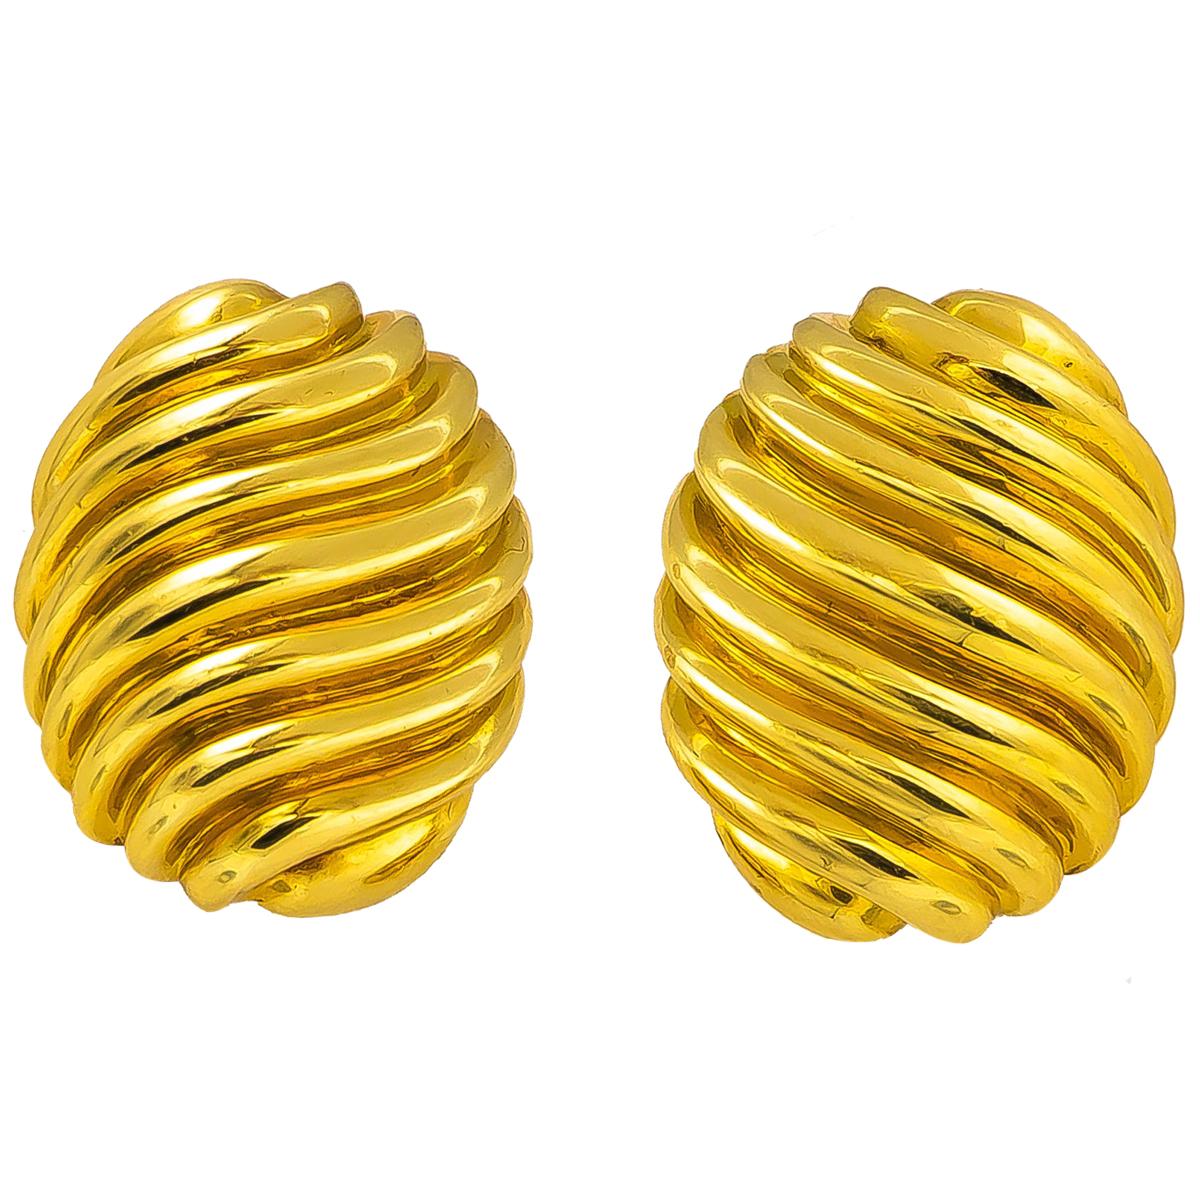 Bvlgari Handmade 18 Karat Gold Earrings